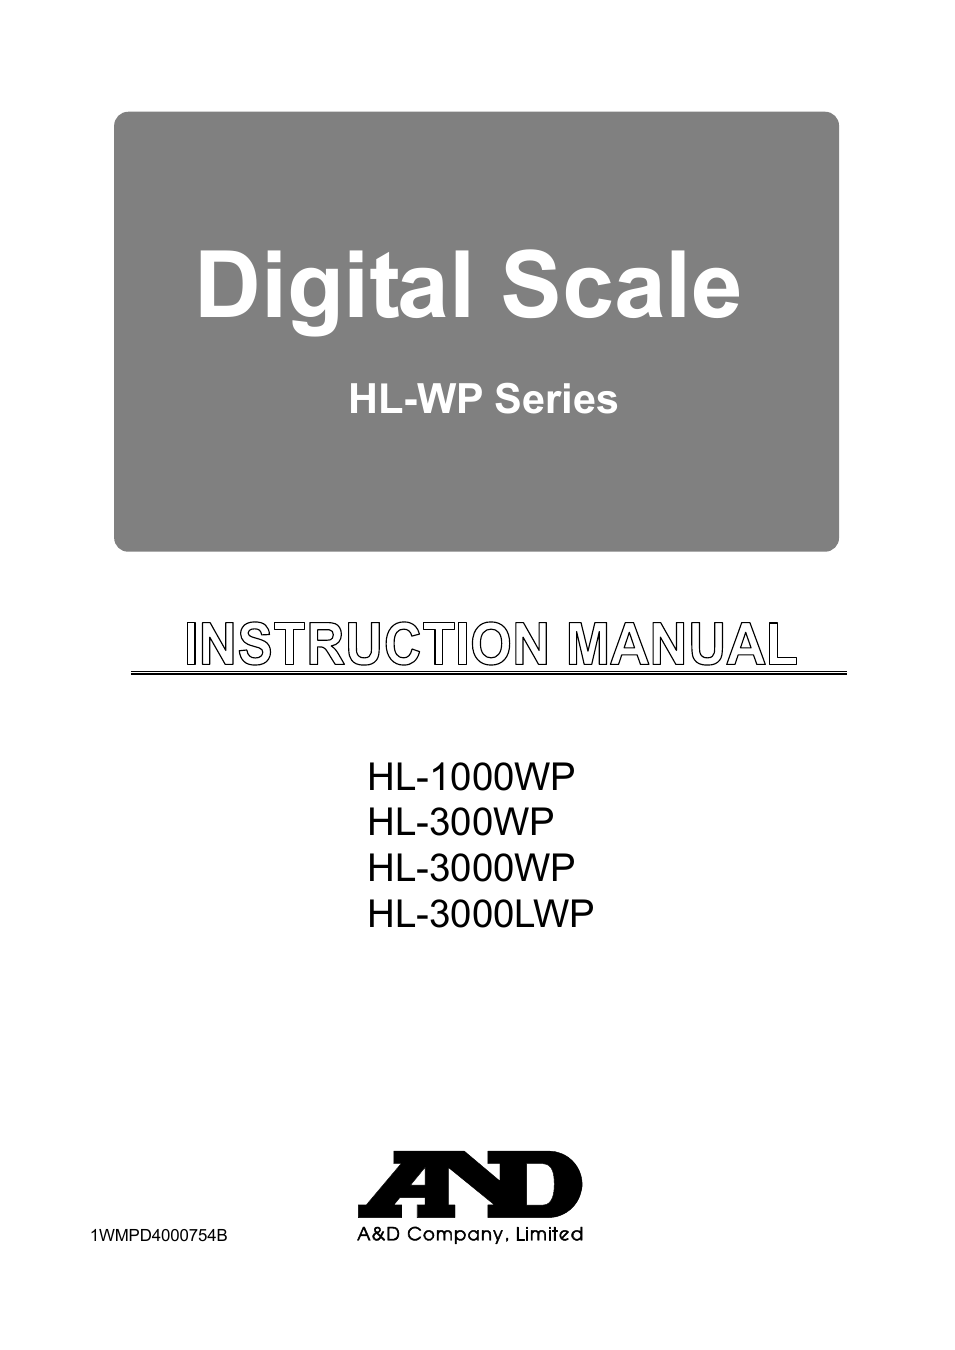 Digital Scale HL-3000LWP